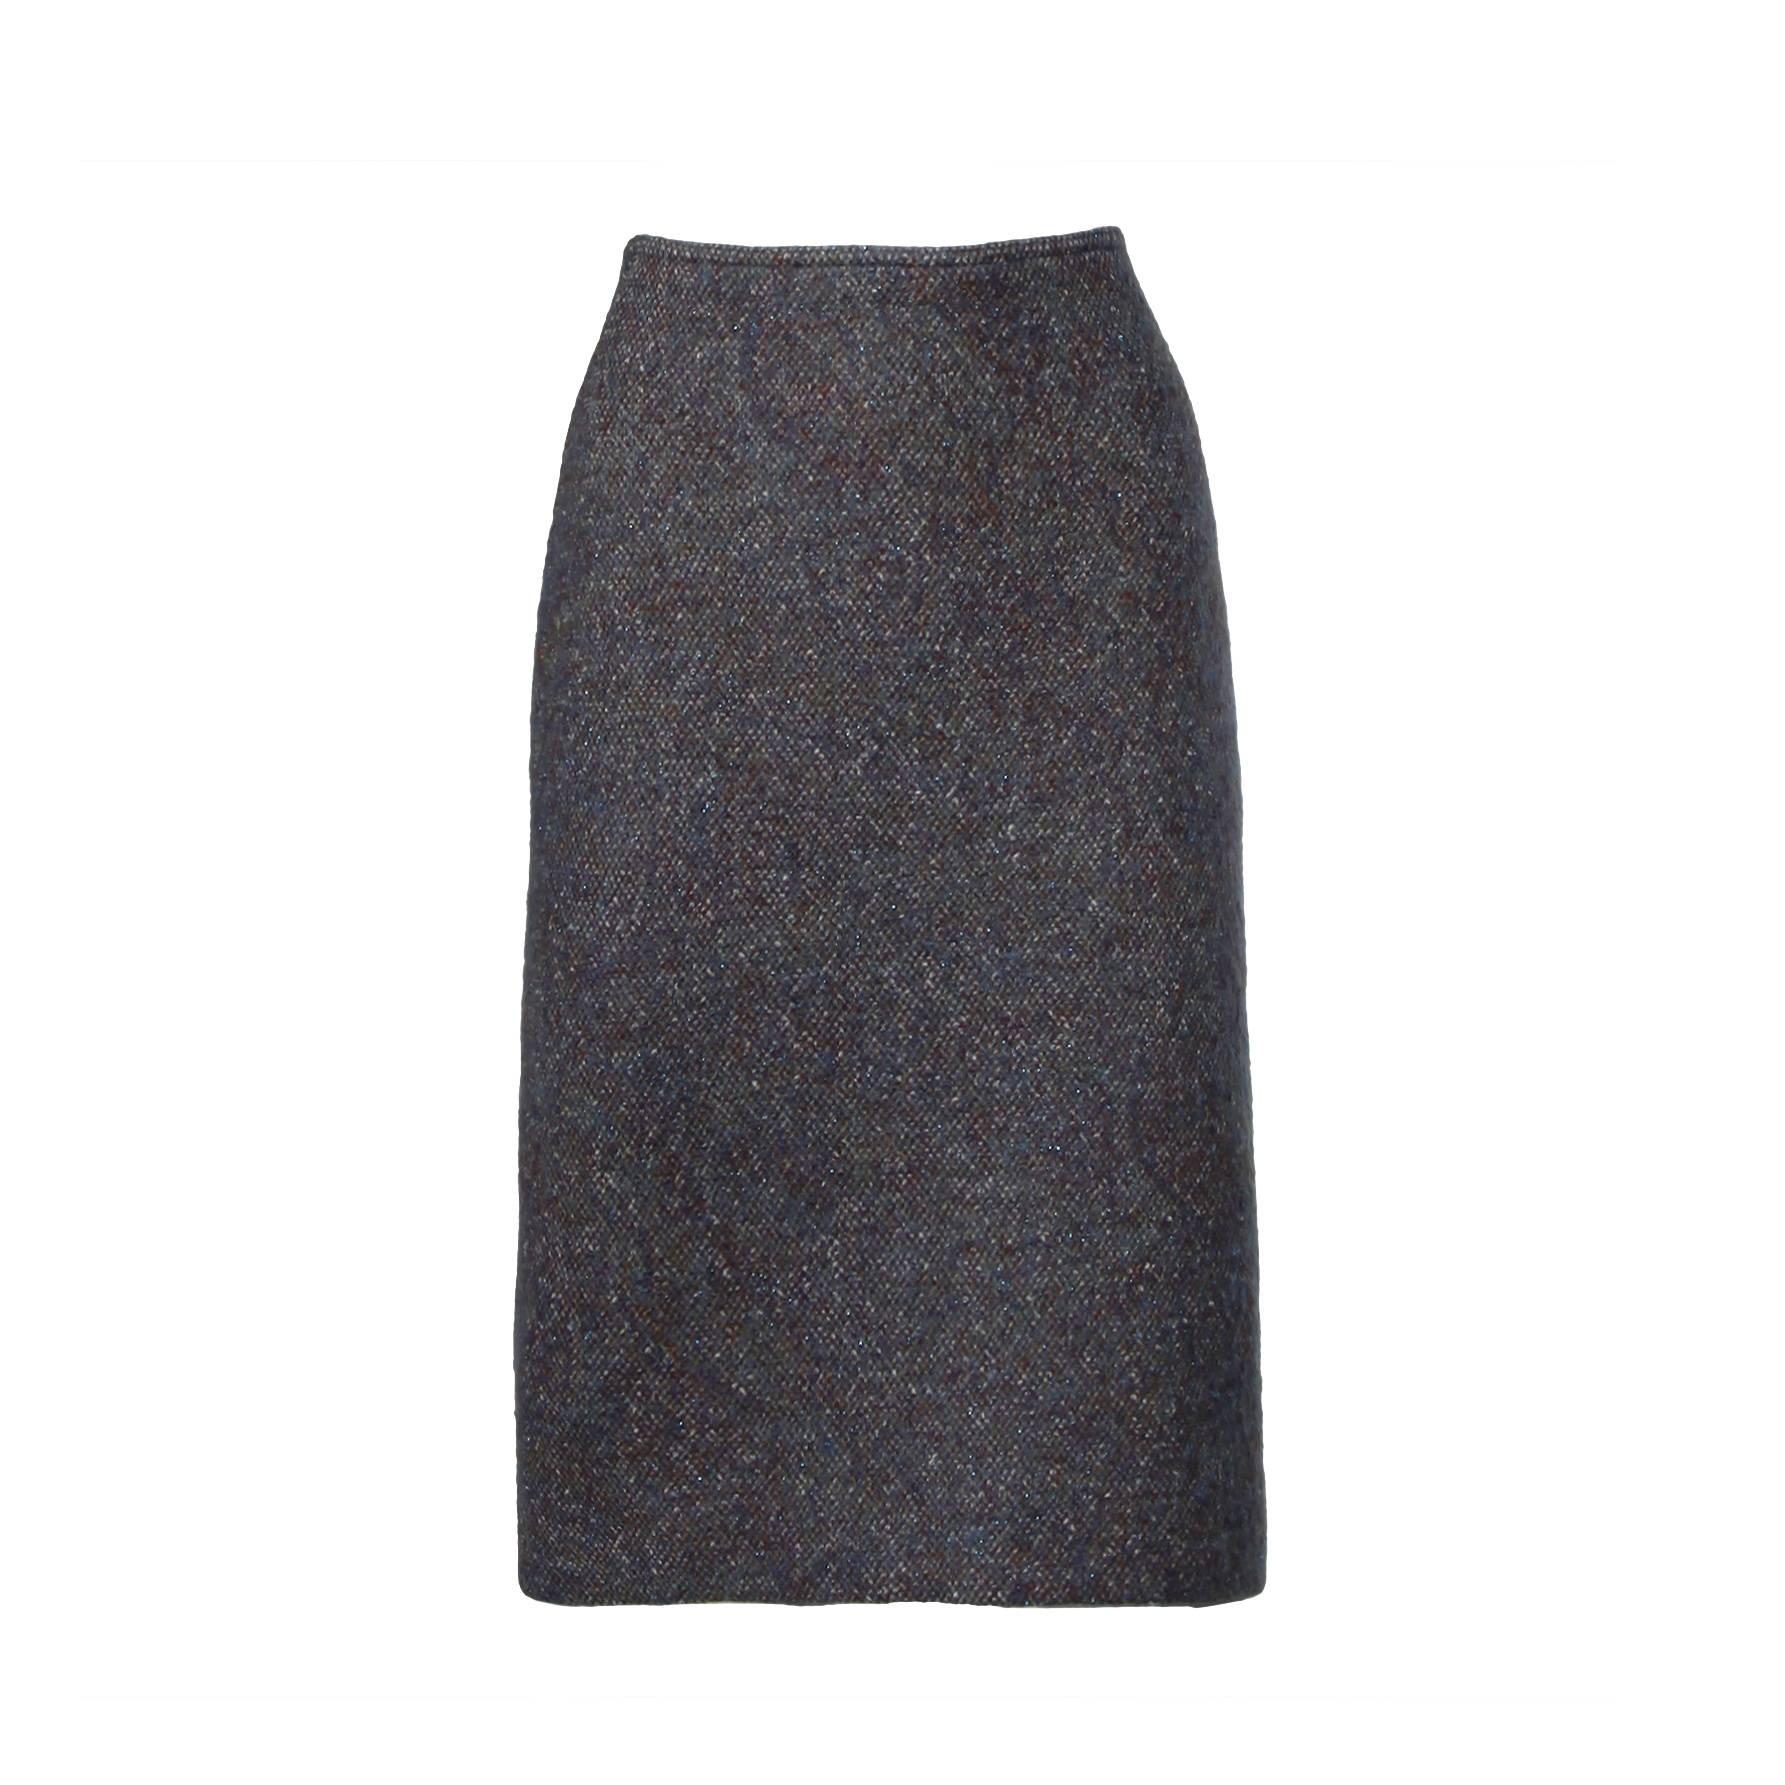 Missoni for Neiman Marcus Vintage Soft Wool Pencil Skirt